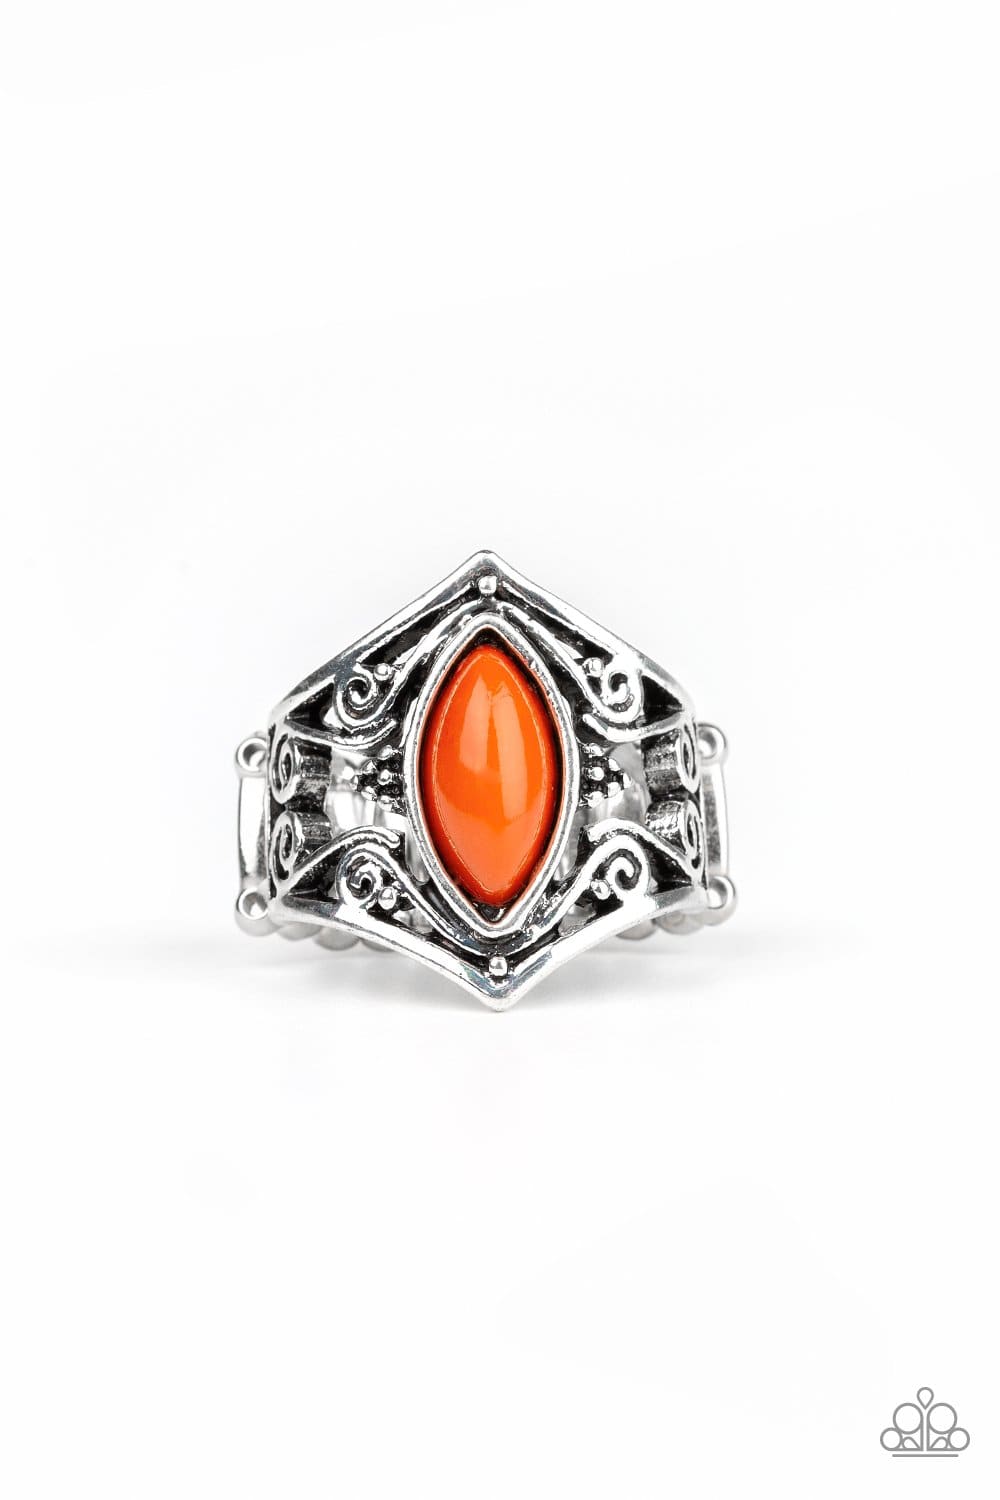 Roamin Rogue - Orange Bead Ring - Paparazzi Accessories - GlaMarous Titi Jewels